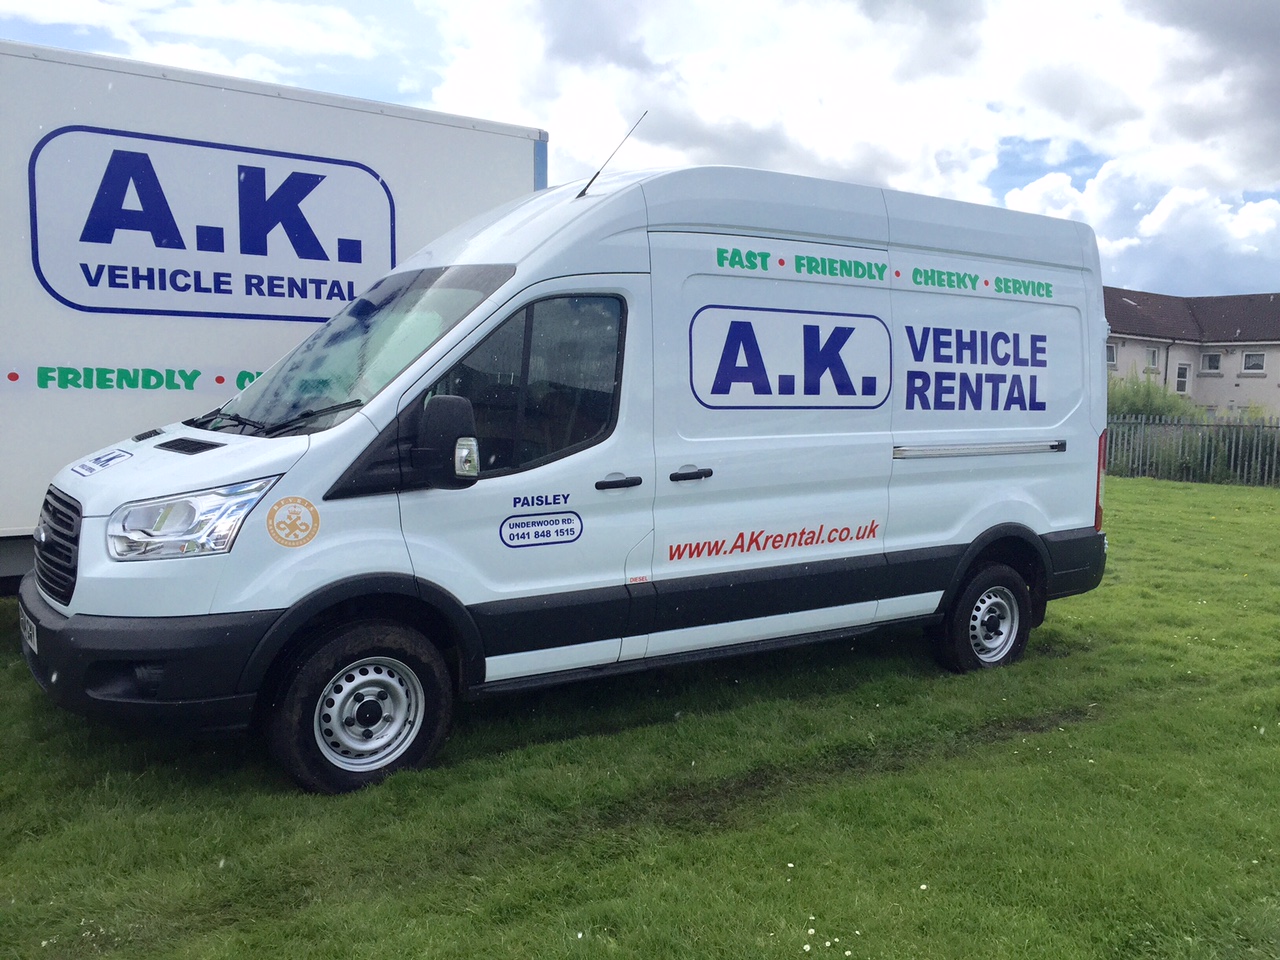 Main photo for AK Vehicle Rental